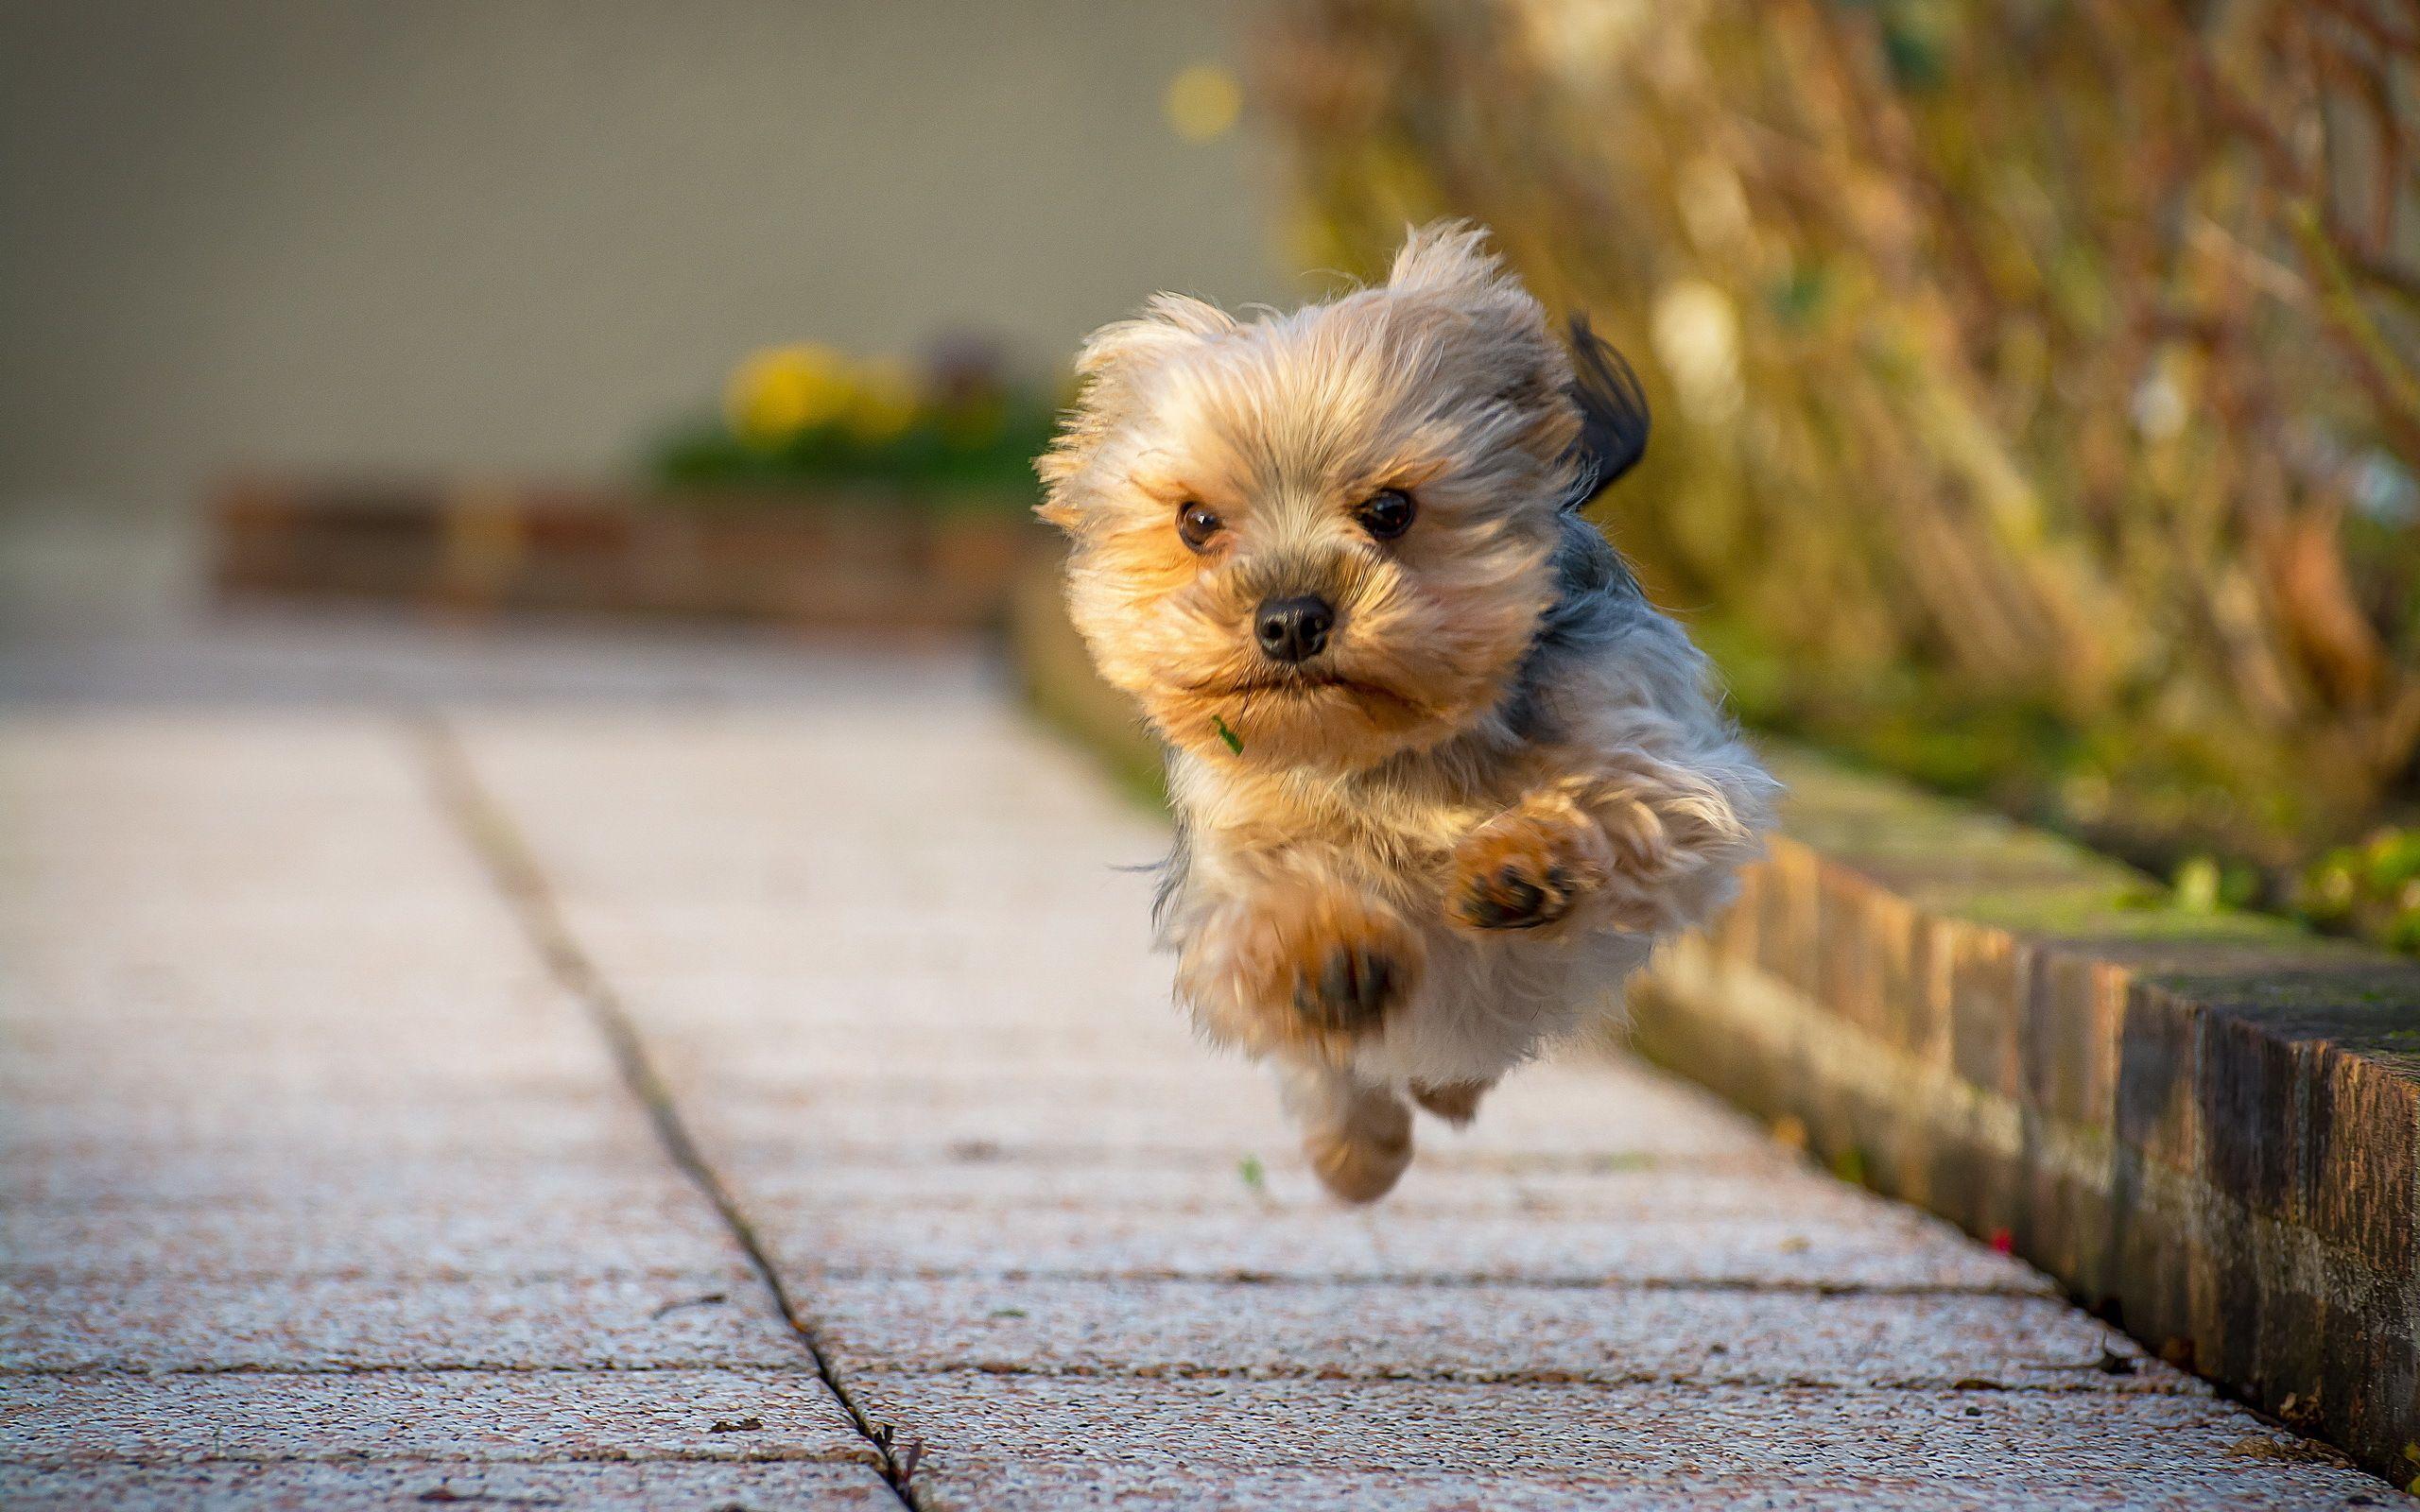 Download wallpaper Yorkshire Terrier, running dog, cute dog